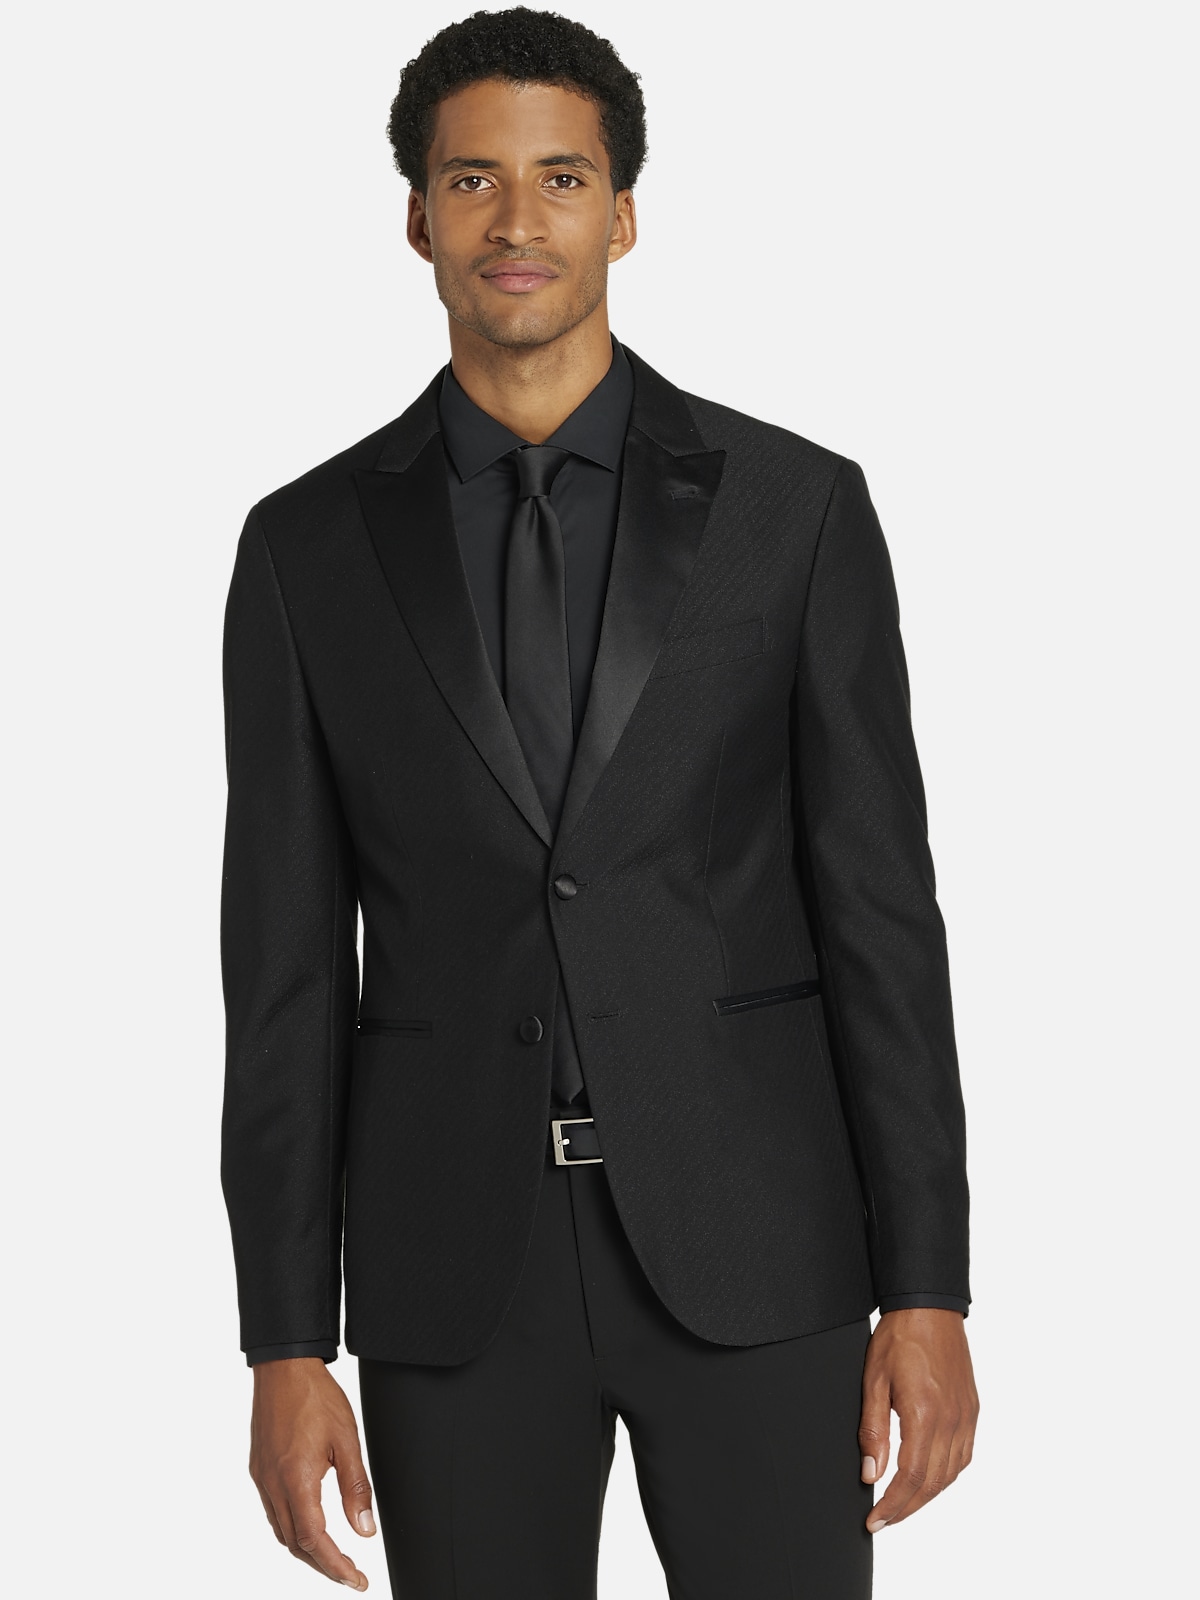 Egara Slim Fit Sparkle Dinner Jacket | All Sale| Men's Wearhouse